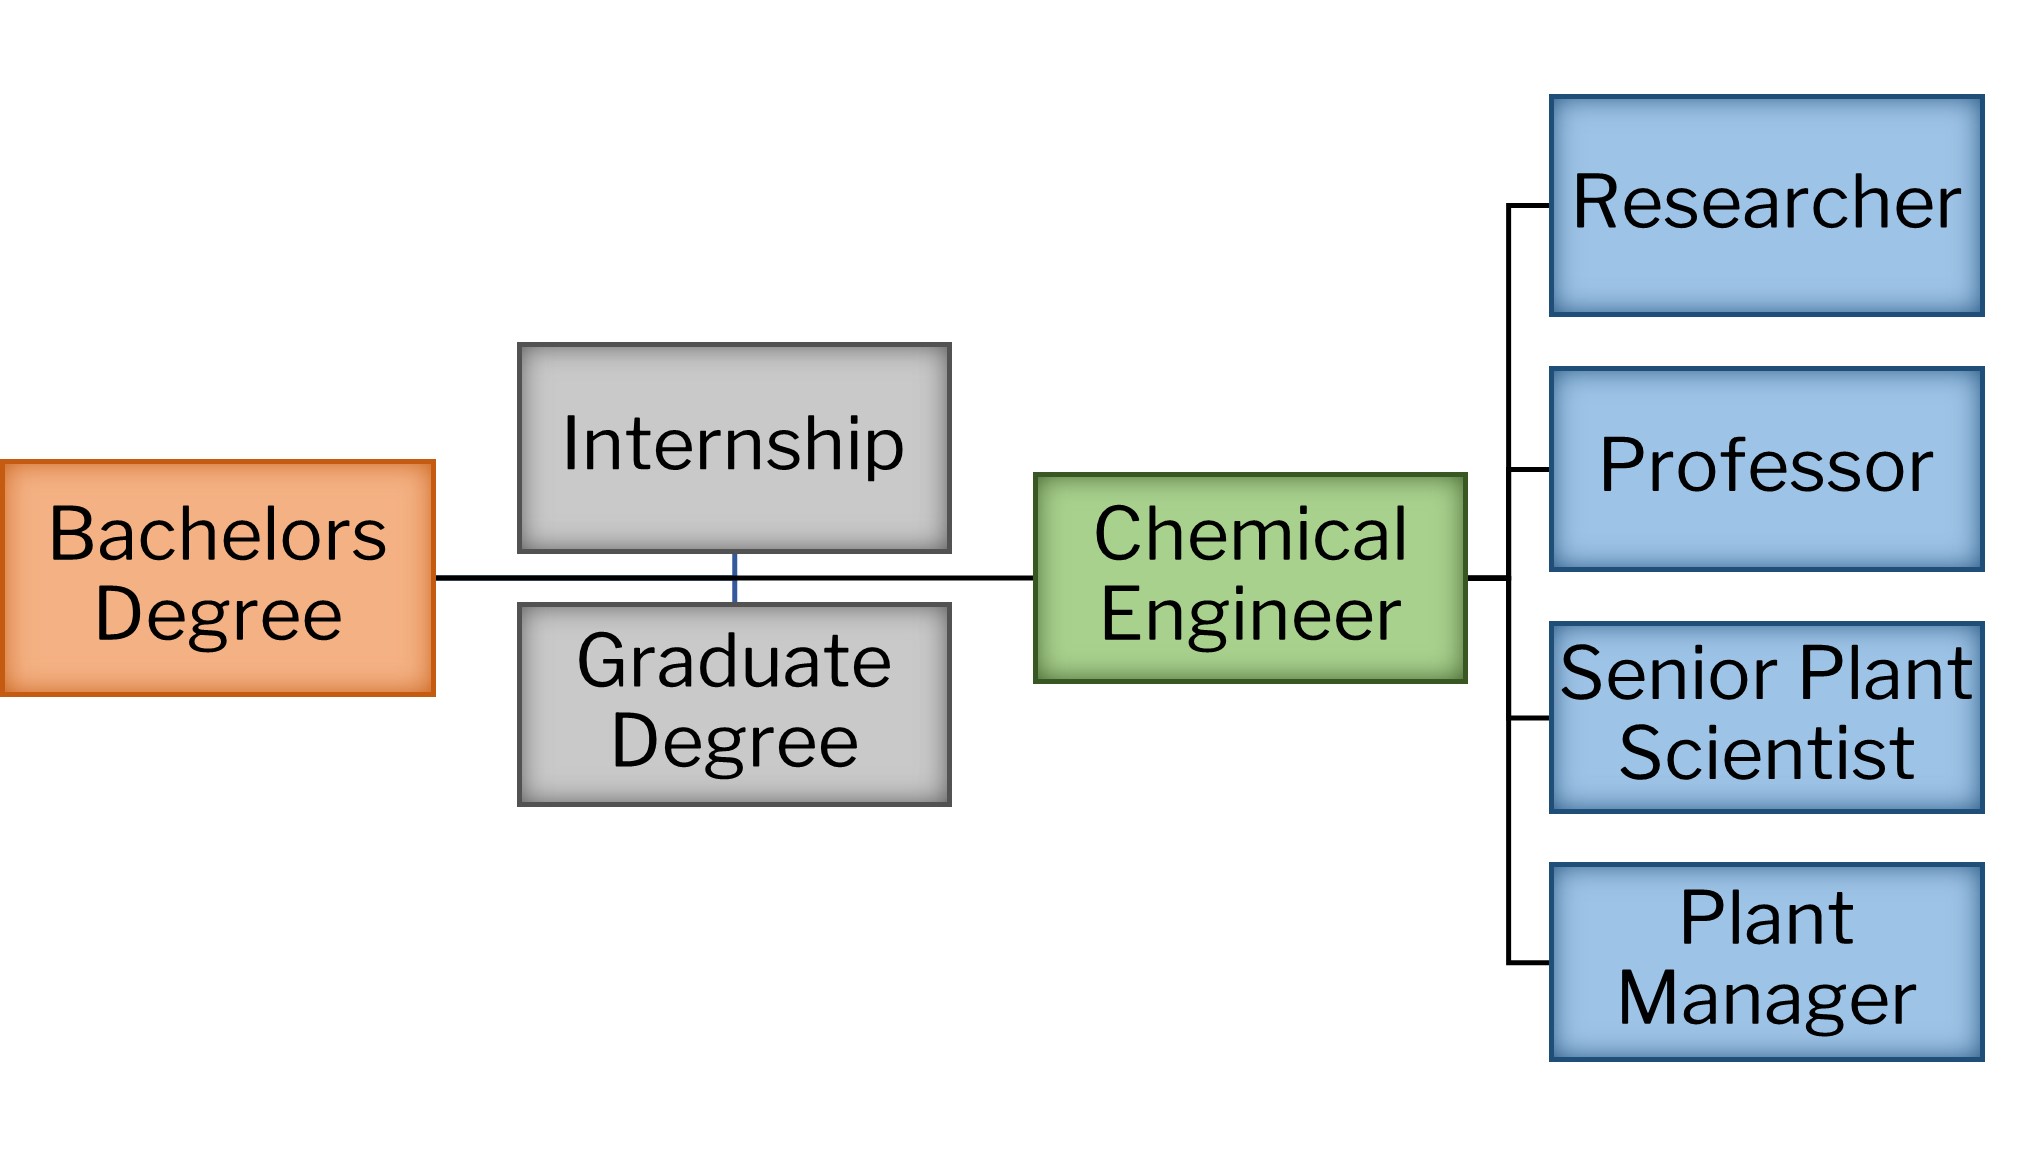 Chemical Engineer career path